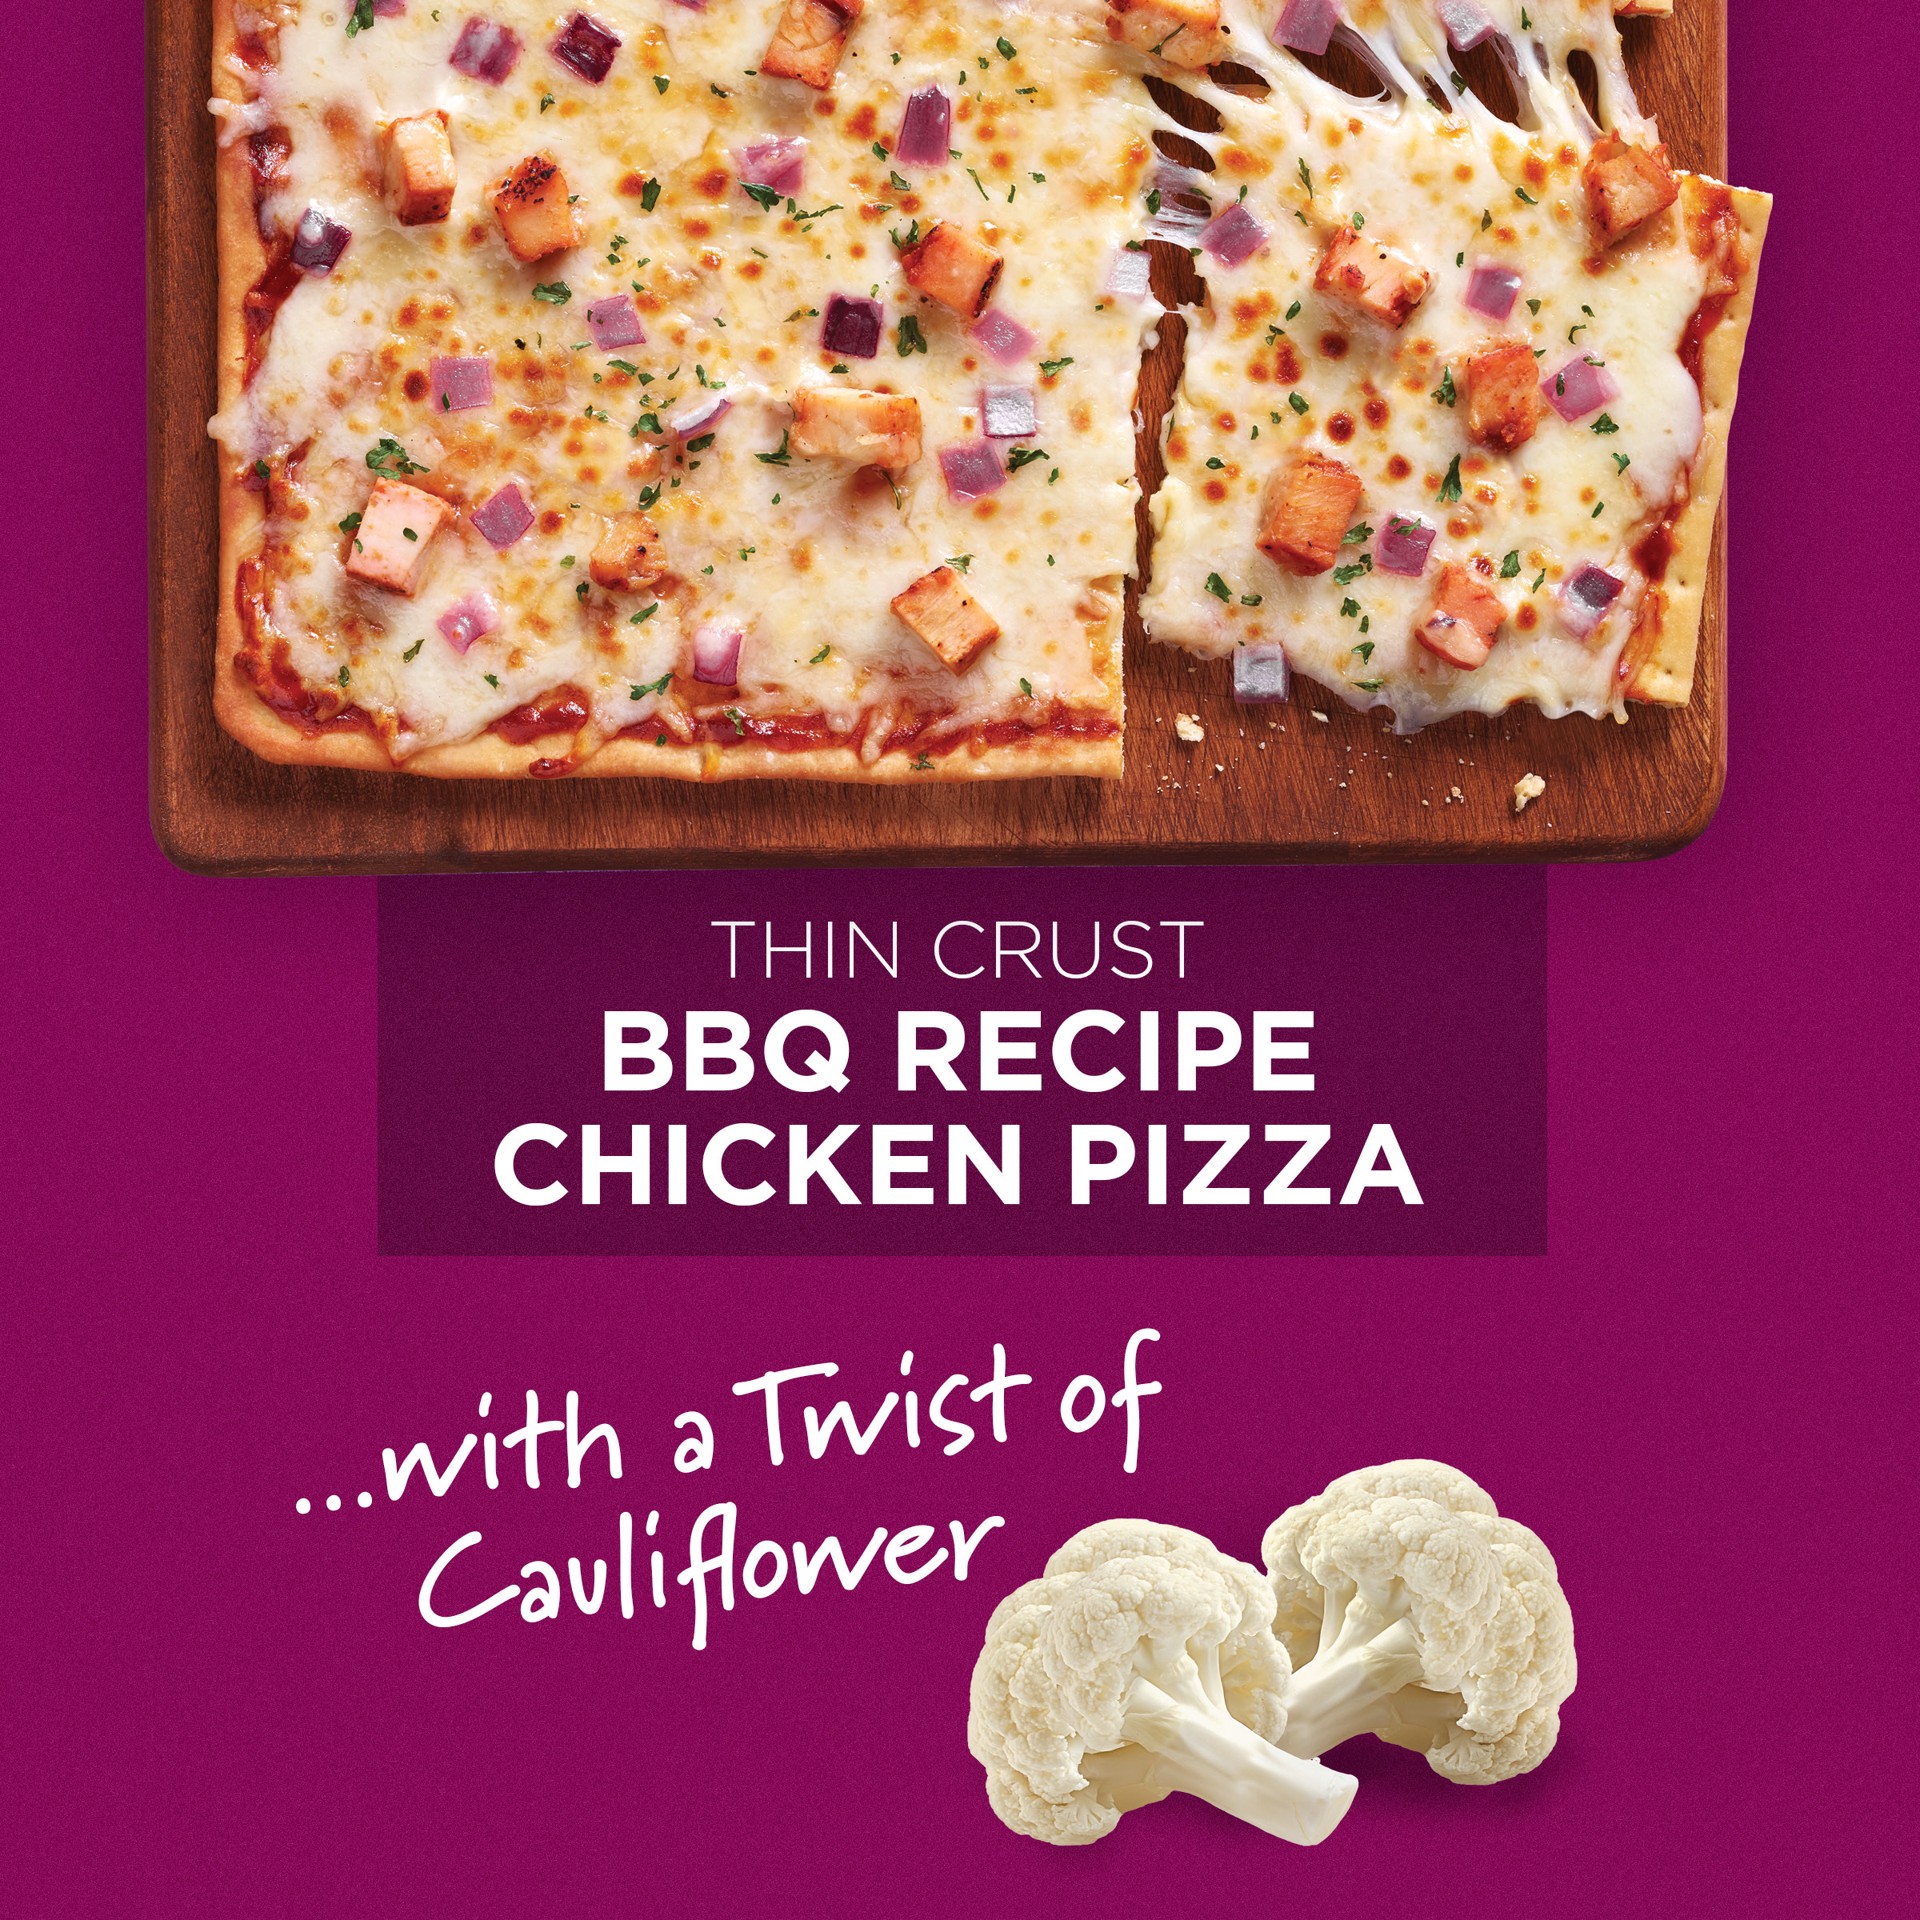 slide 7 of 7, O, That's Good! BBQ Recipe Chicken Frozen Pizza with Cauliflower Thin Crust, Red Onions, Parsley & Mozzarella, 14.7 oz Box, 14.6 oz